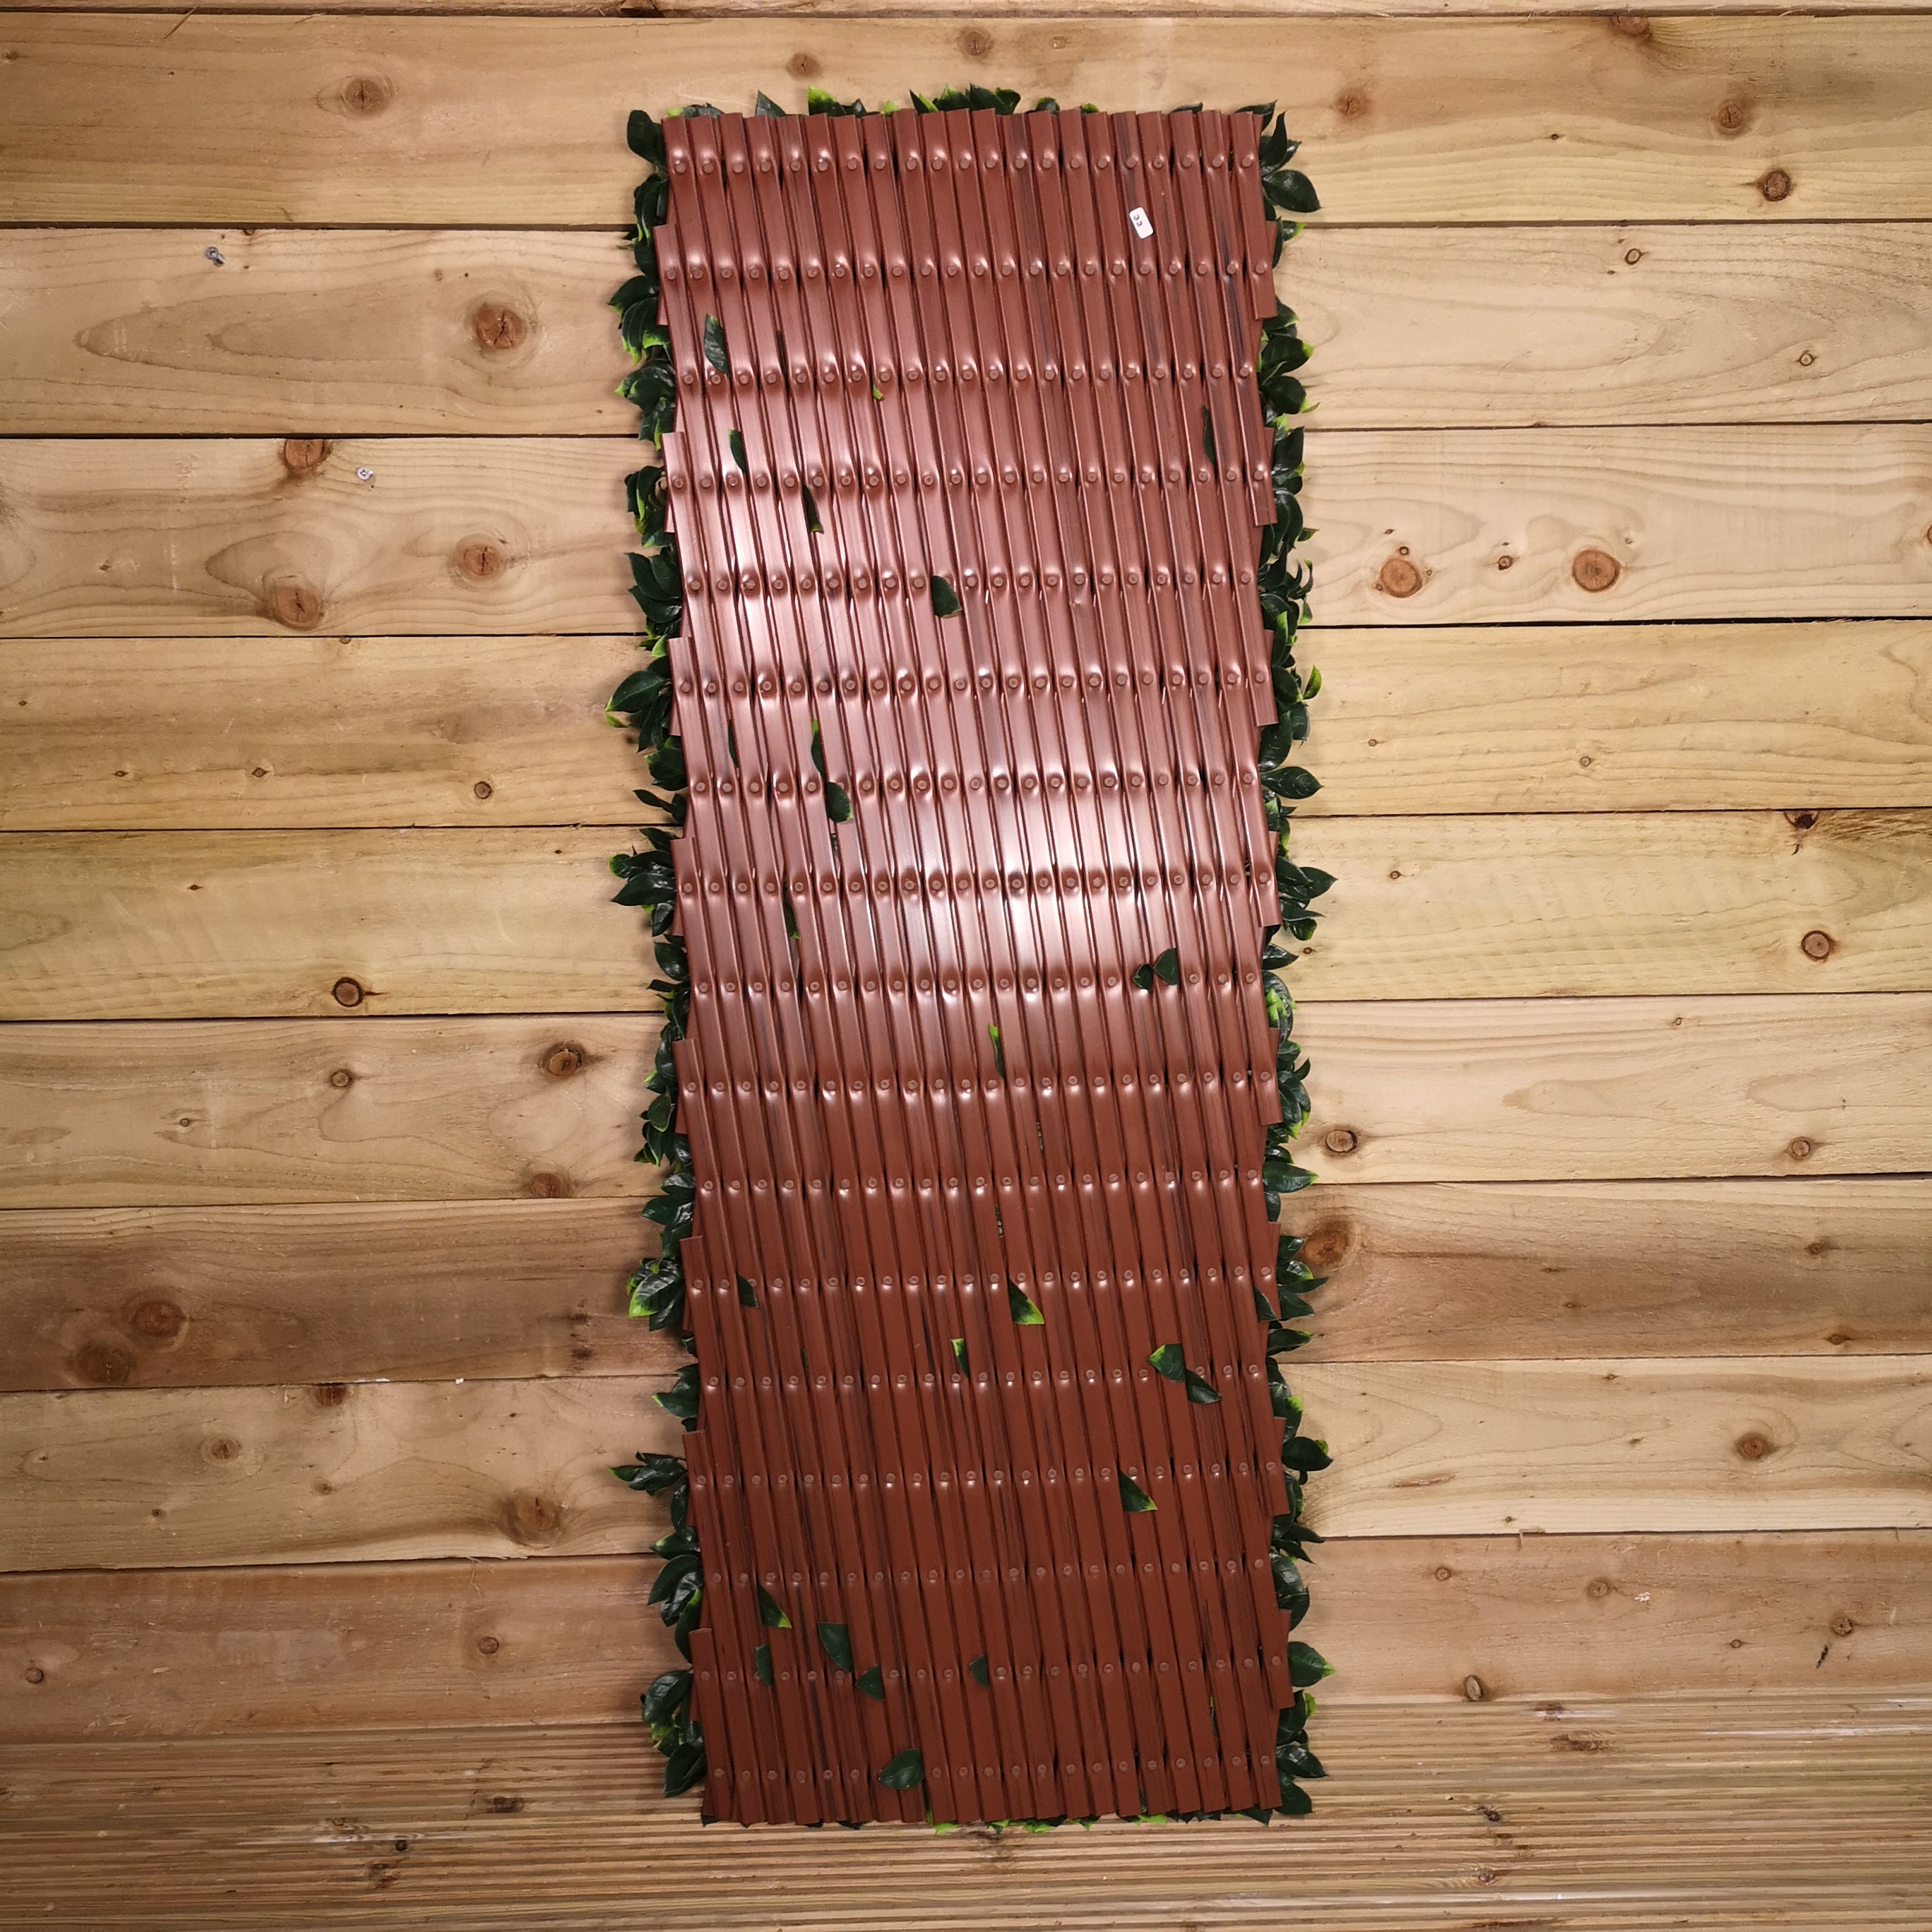 100cm x 200cm PE Backed Artificial Fence Garden Trellis Privacy Screening Indoor Outdoor Wall Panel - Gardenia Leaf